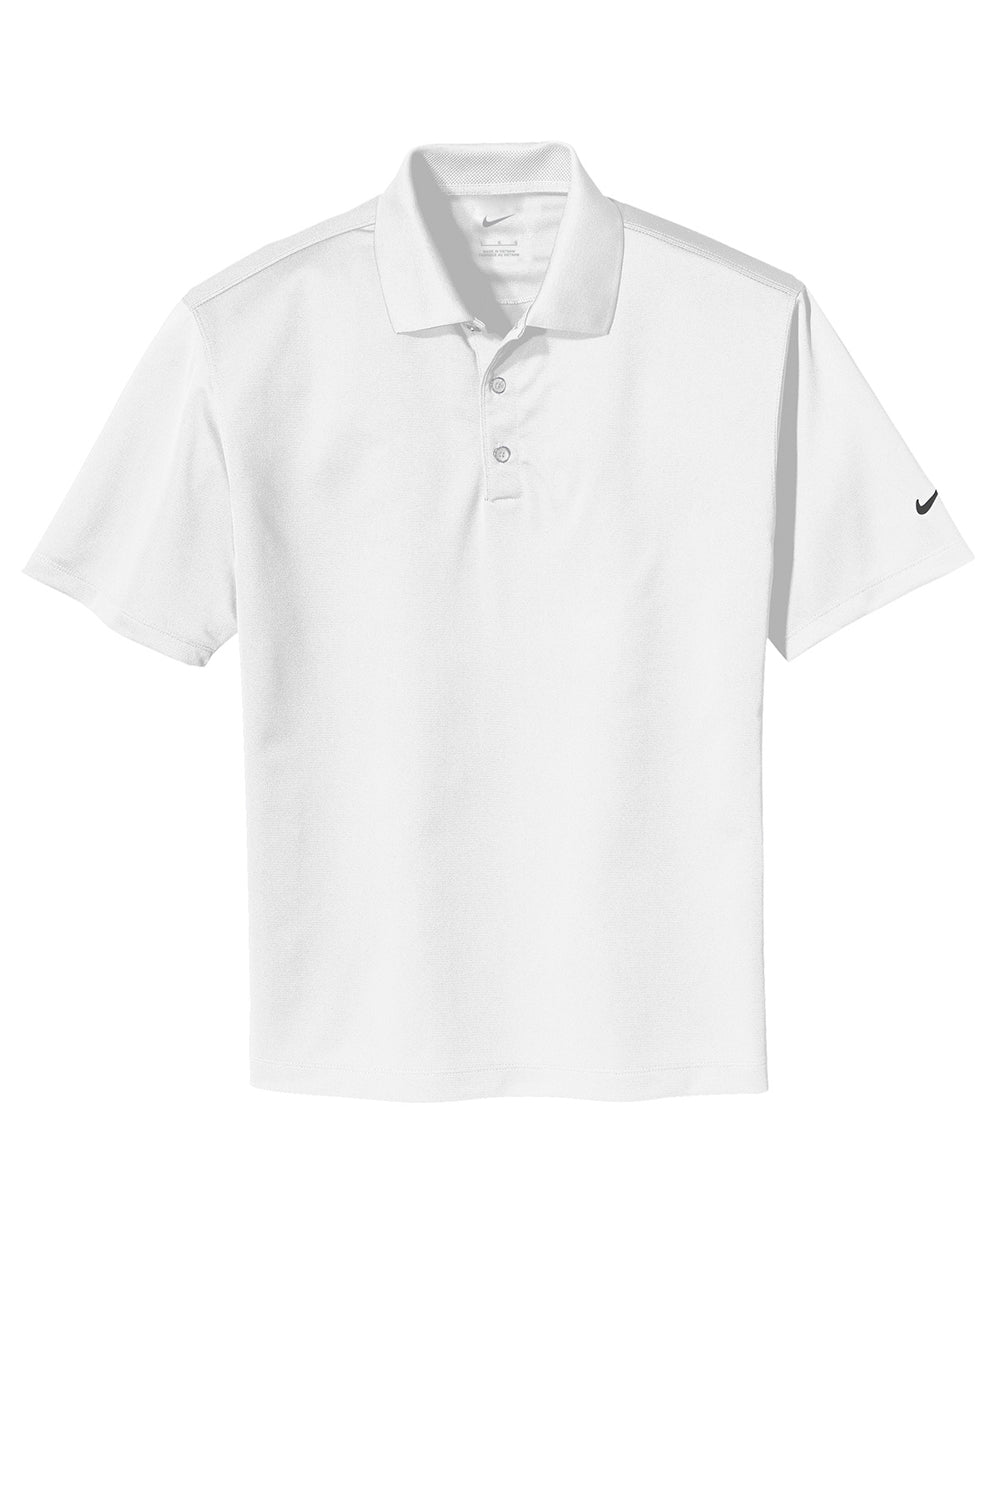 Nike 203690 Mens Tech Basic Dri-Fit Moisture Wicking Short Sleeve Polo Shirt White Flat Front